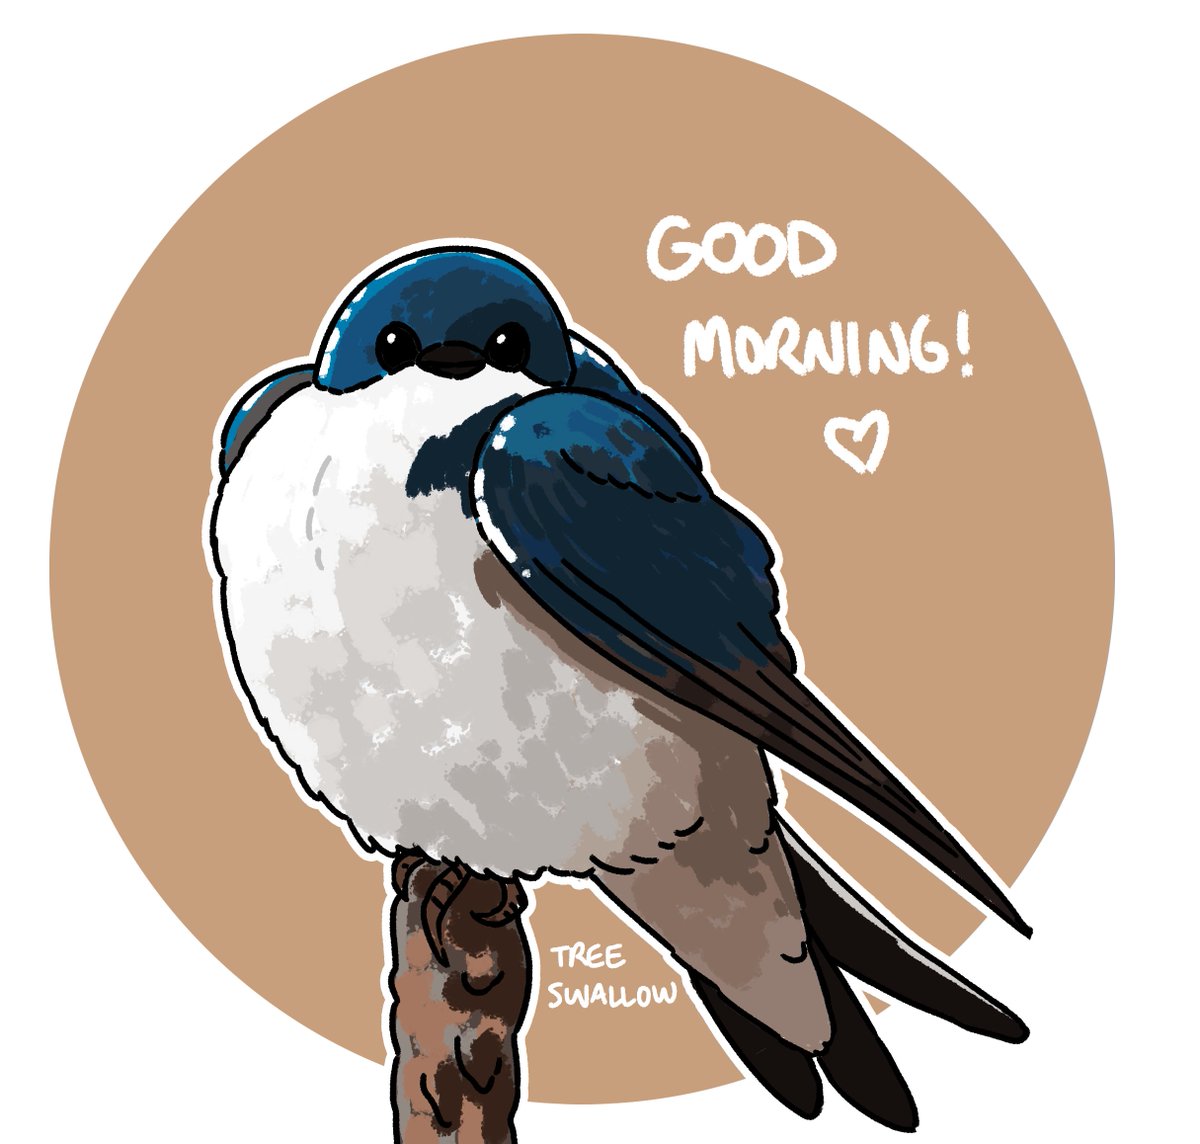 Morning!! Here's a tree swallow ^_^ #bird #treeswallow